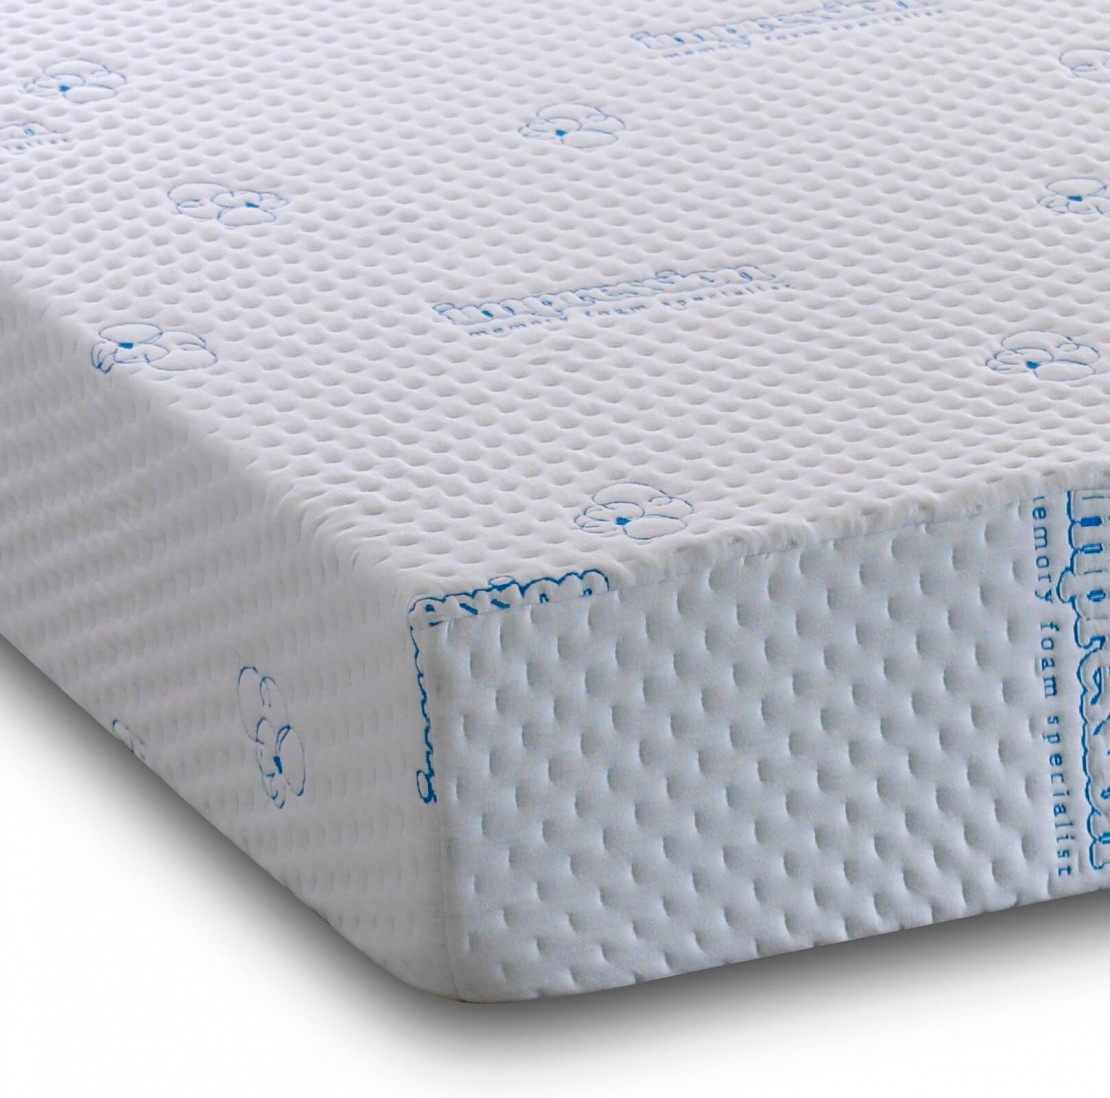 /_images/product-photos/visco-therapy-visco-1000-hd-memory-foam-regular-mattress-a.jpg